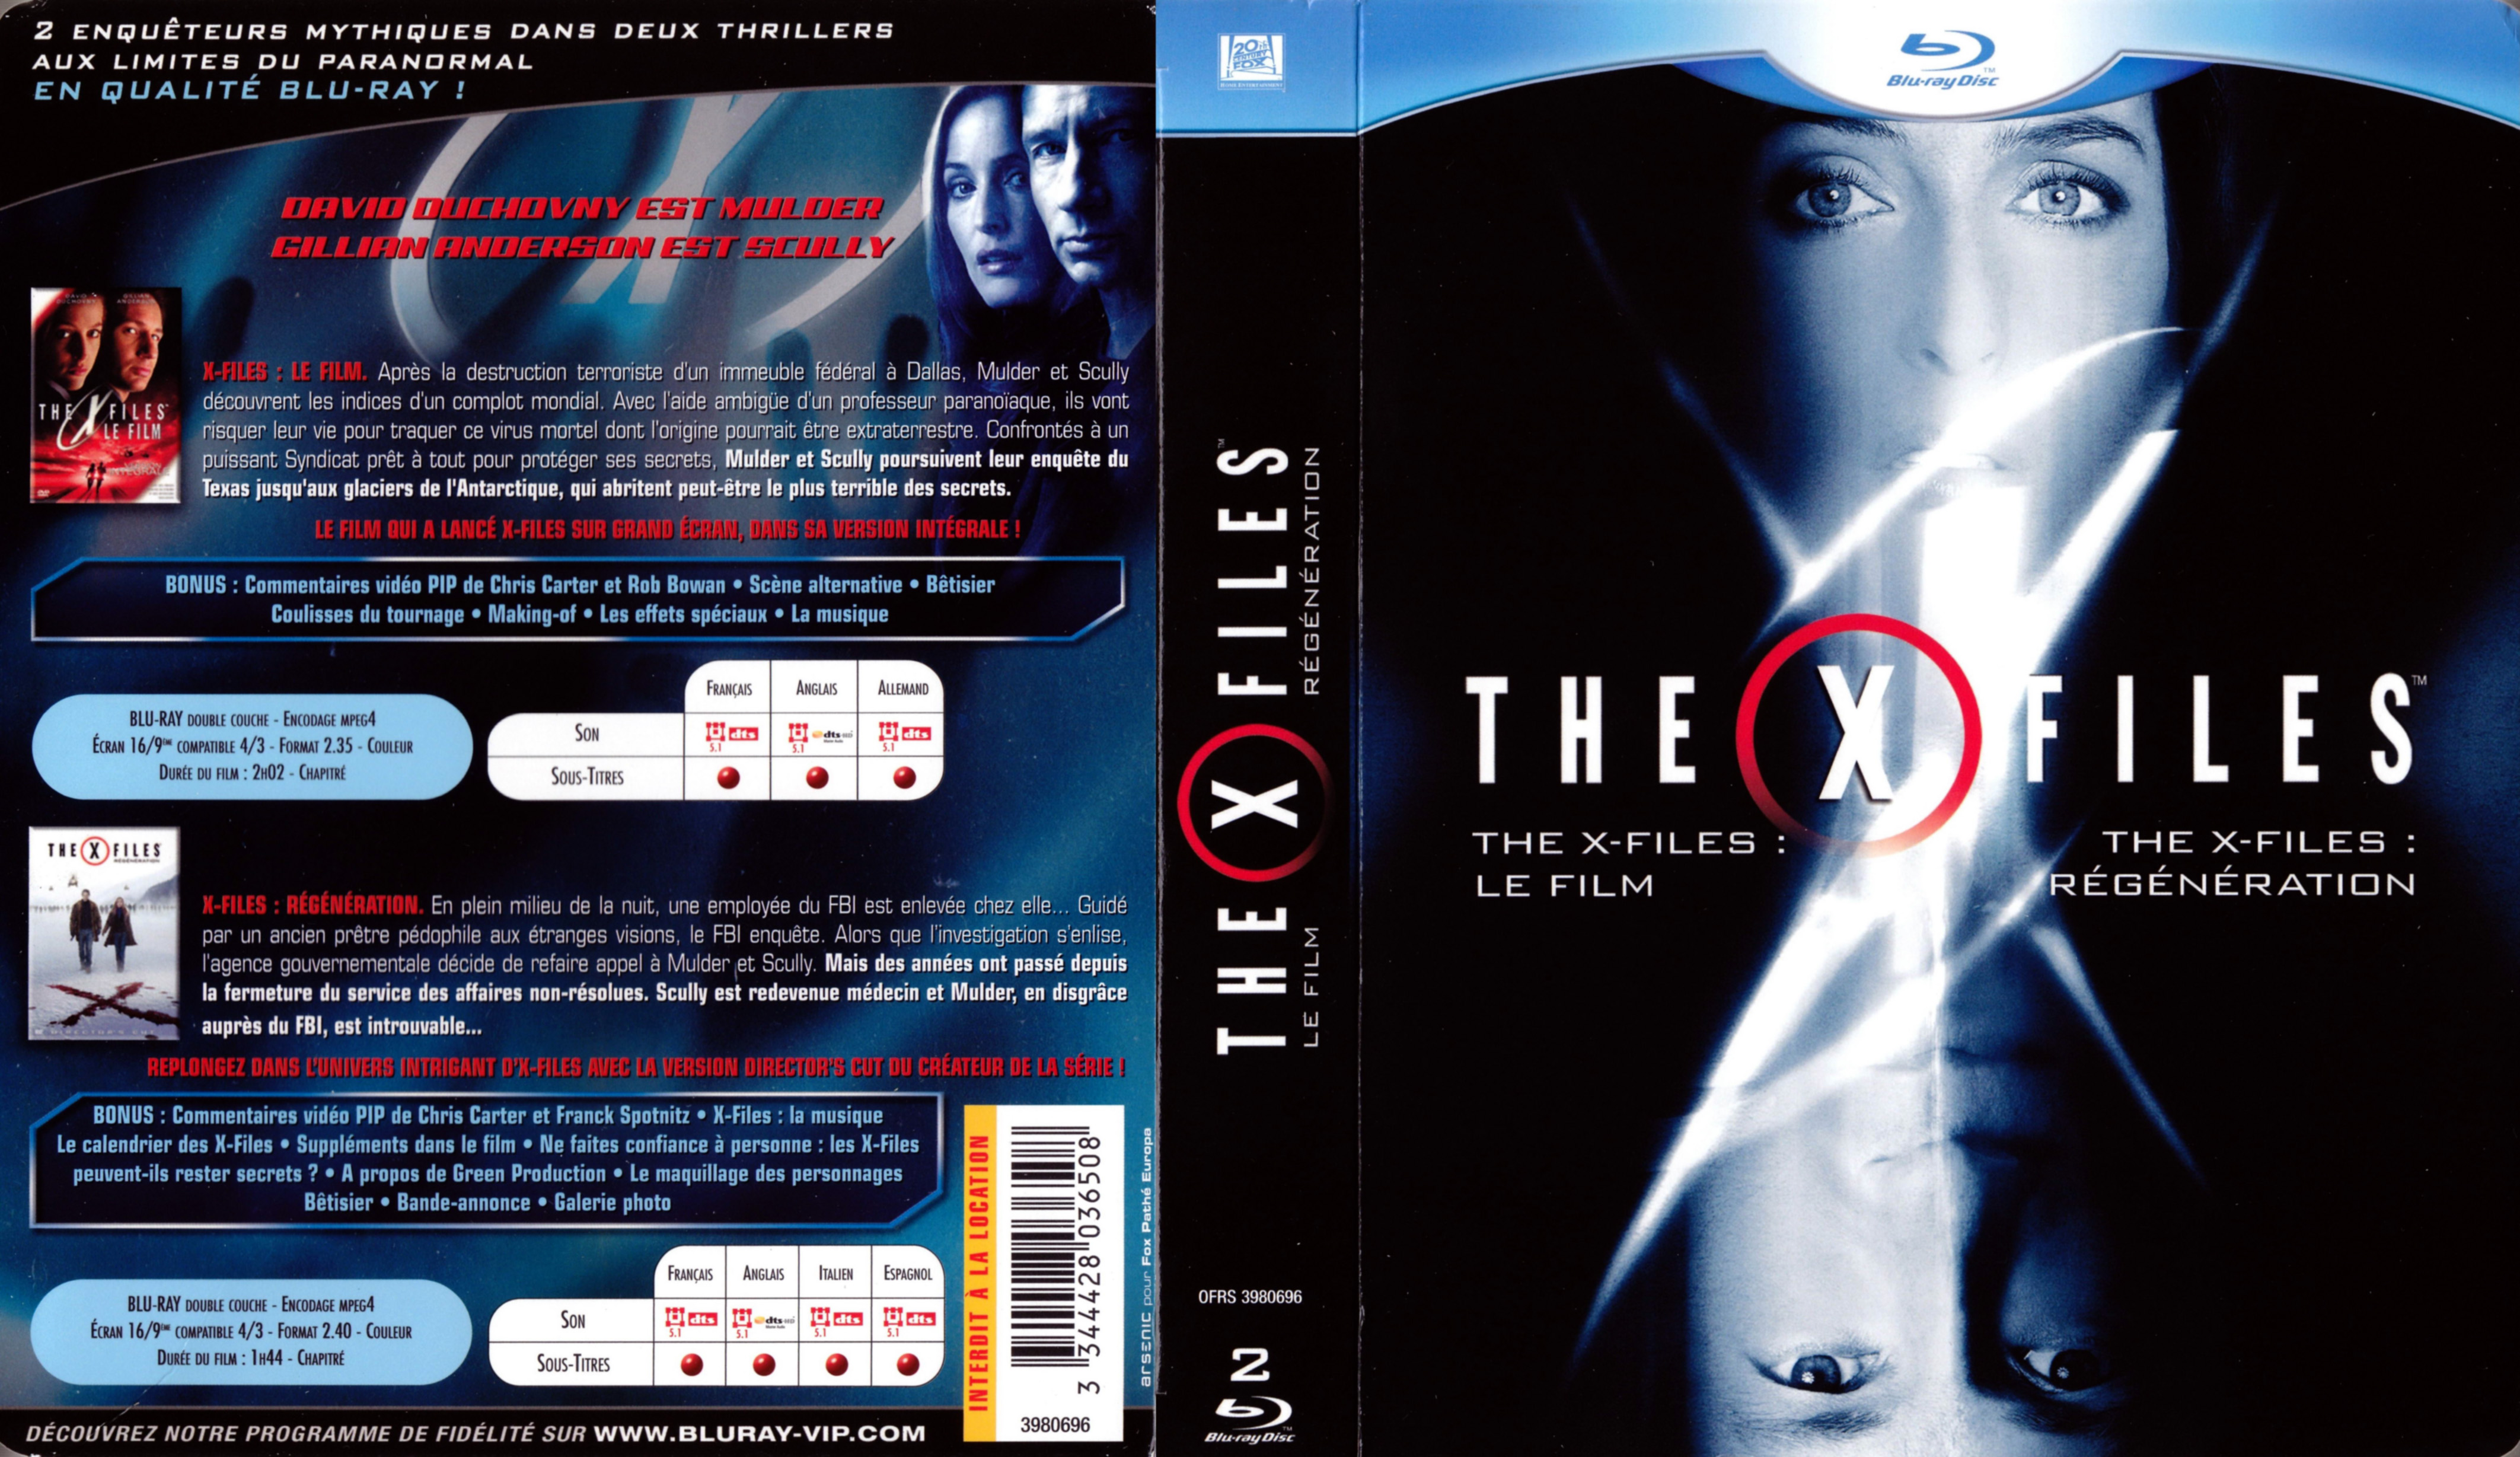 Jaquette DVD The X Files COFFRET 2 films  (BLU-RAY)